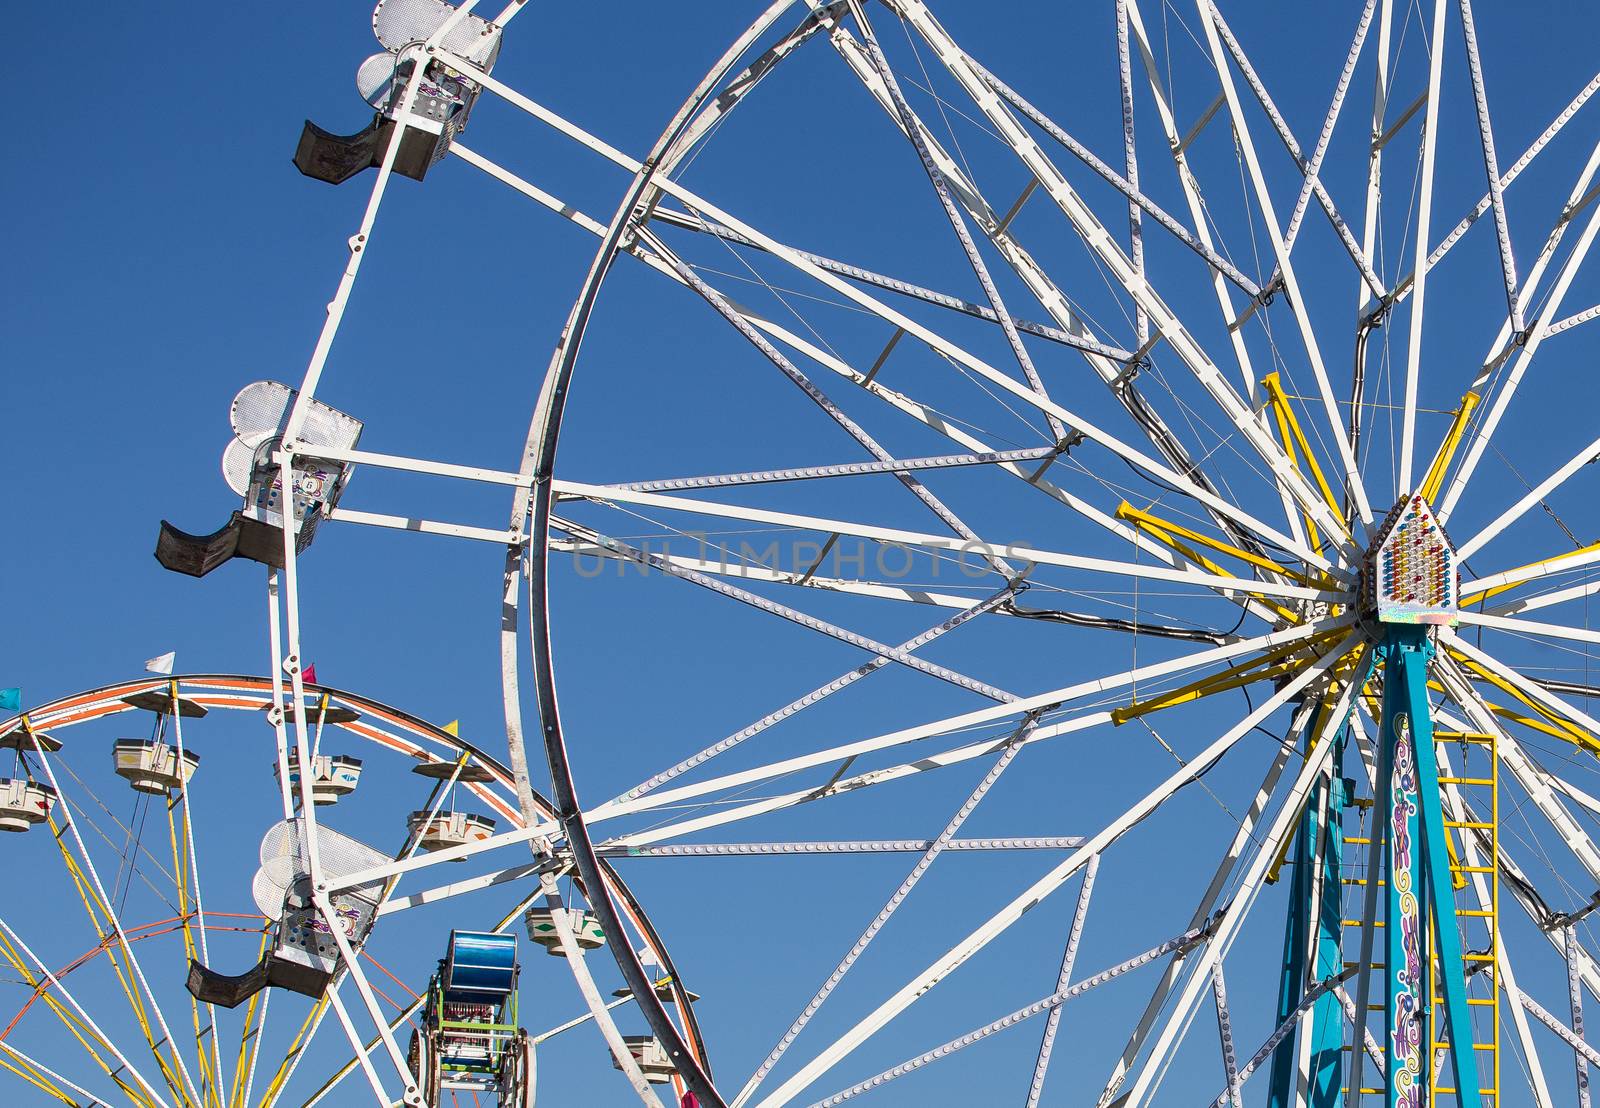 Two Ferris Wheels at the county fair.